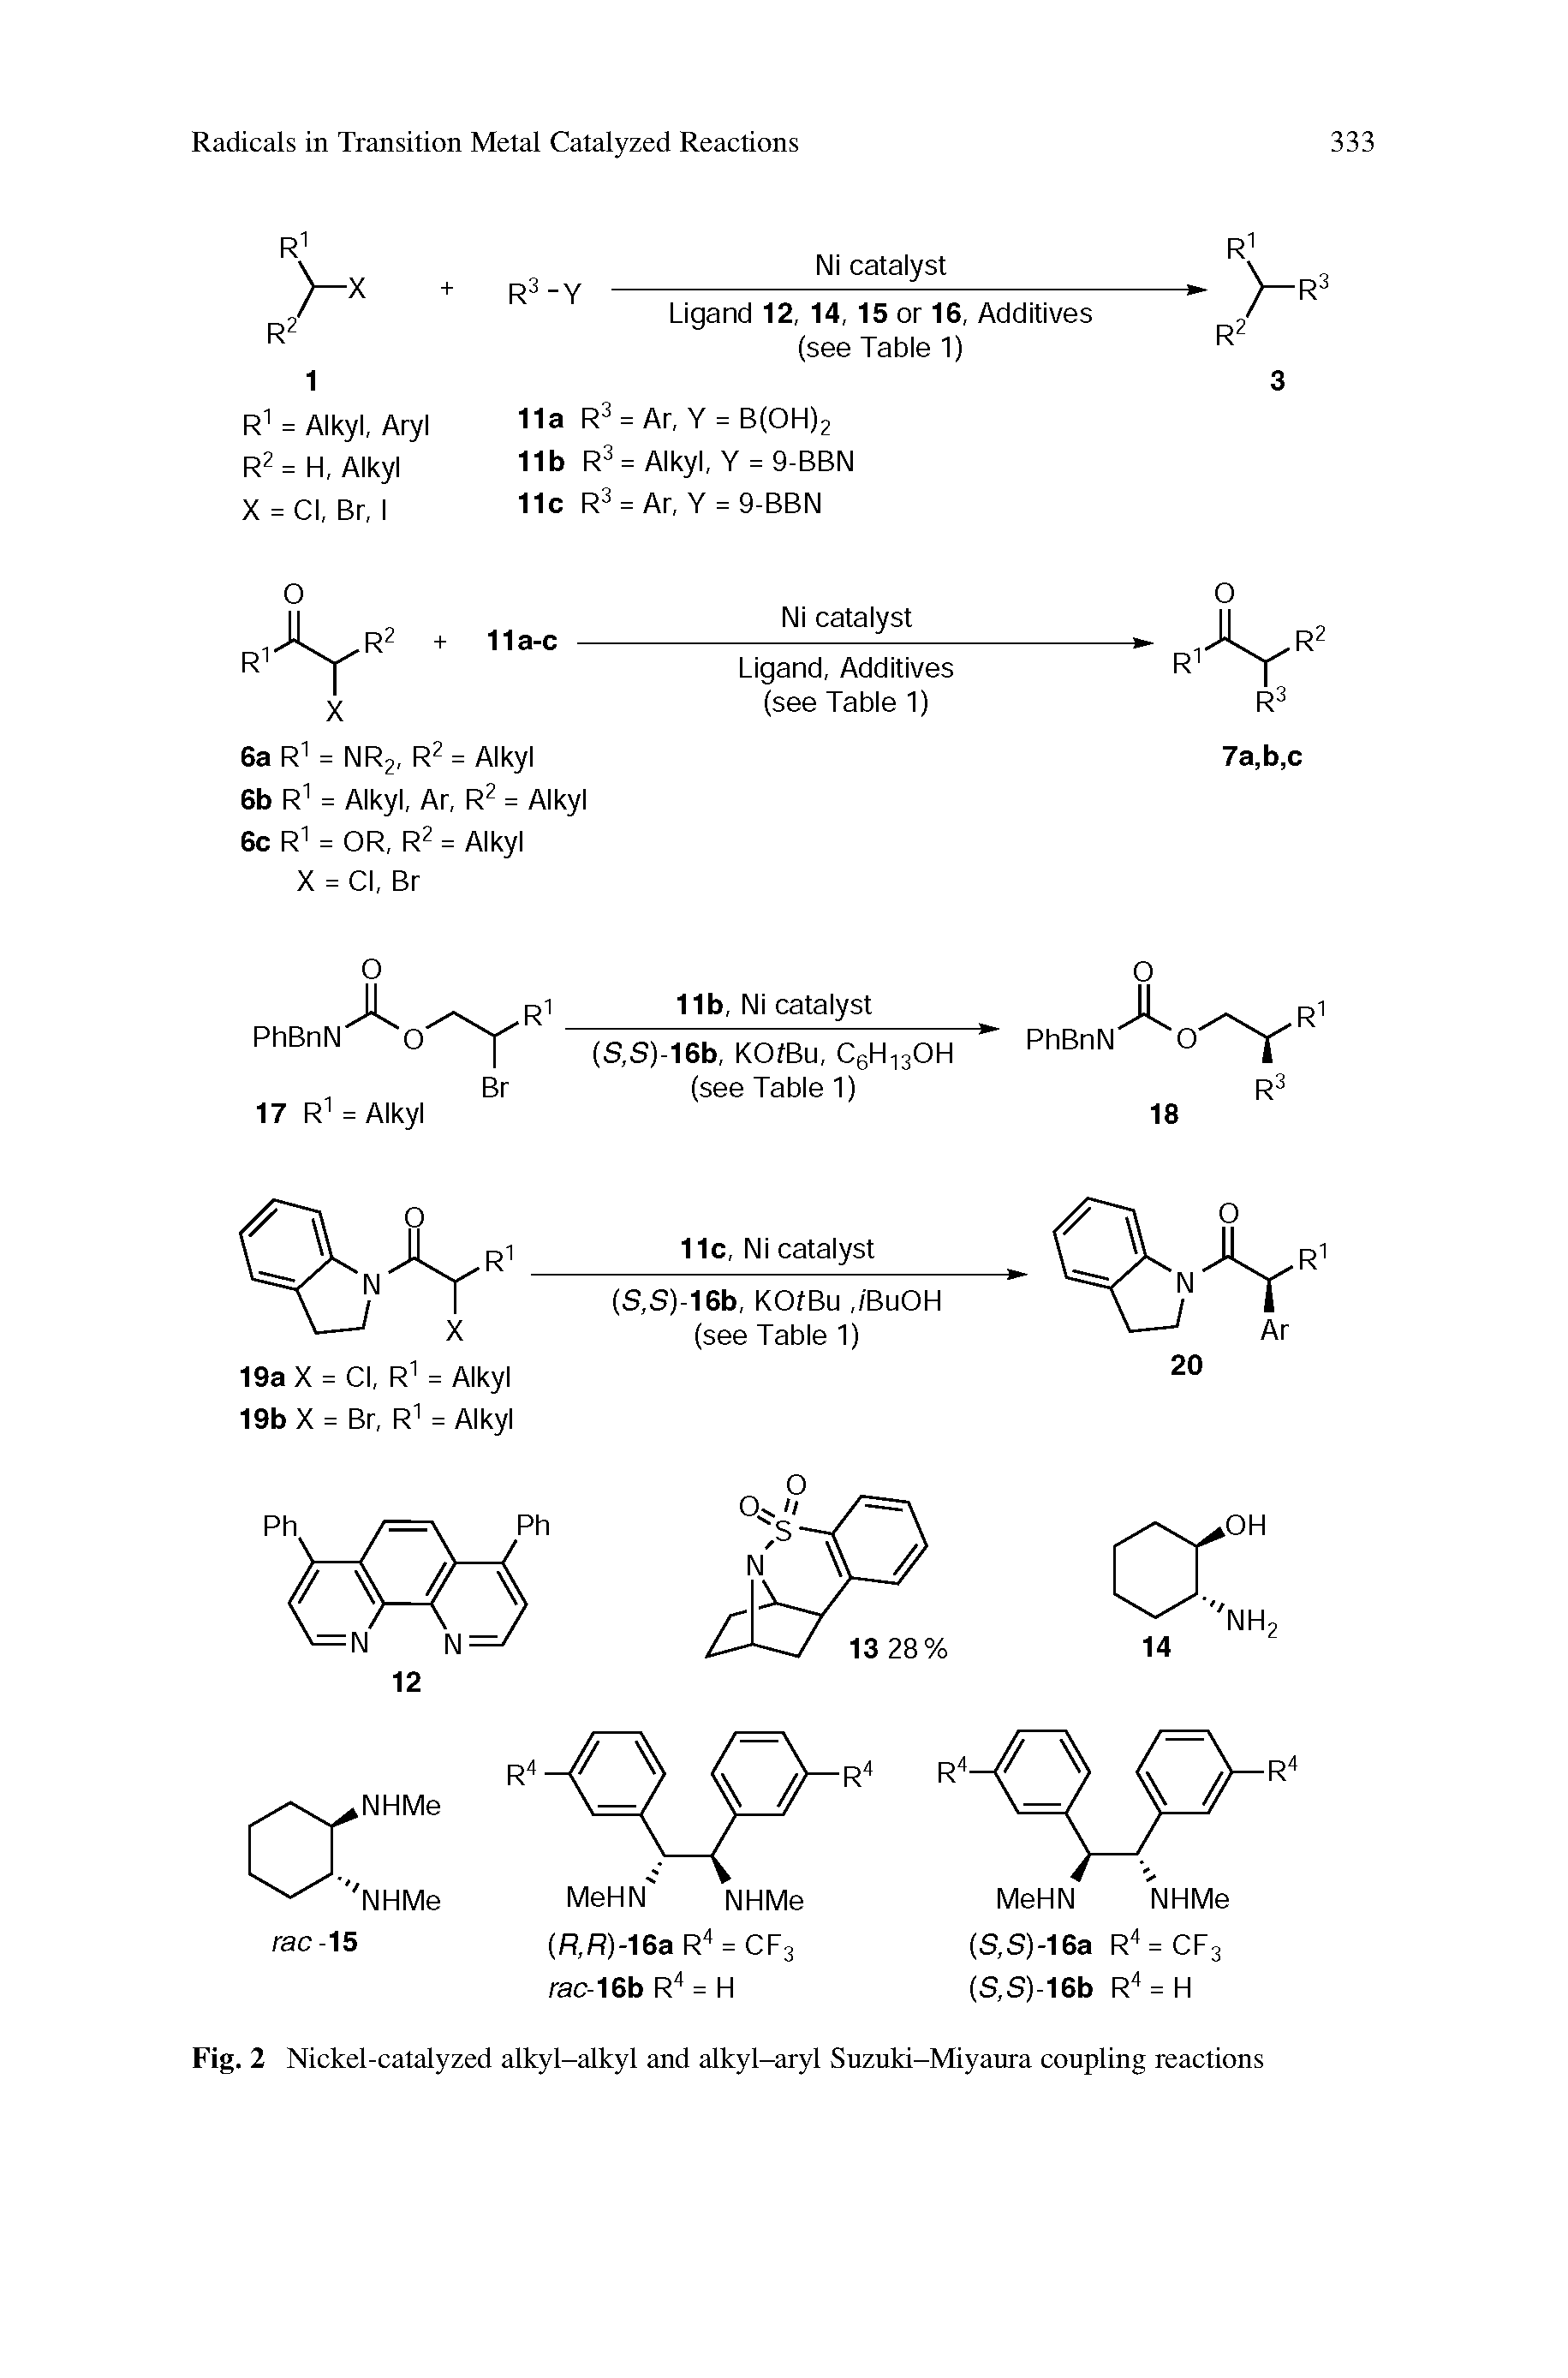 Fig. 2 Nickel-catalyzed alkyl-alkyl and alkyl-aryl Suzuki-Miyaura coupling reactions...